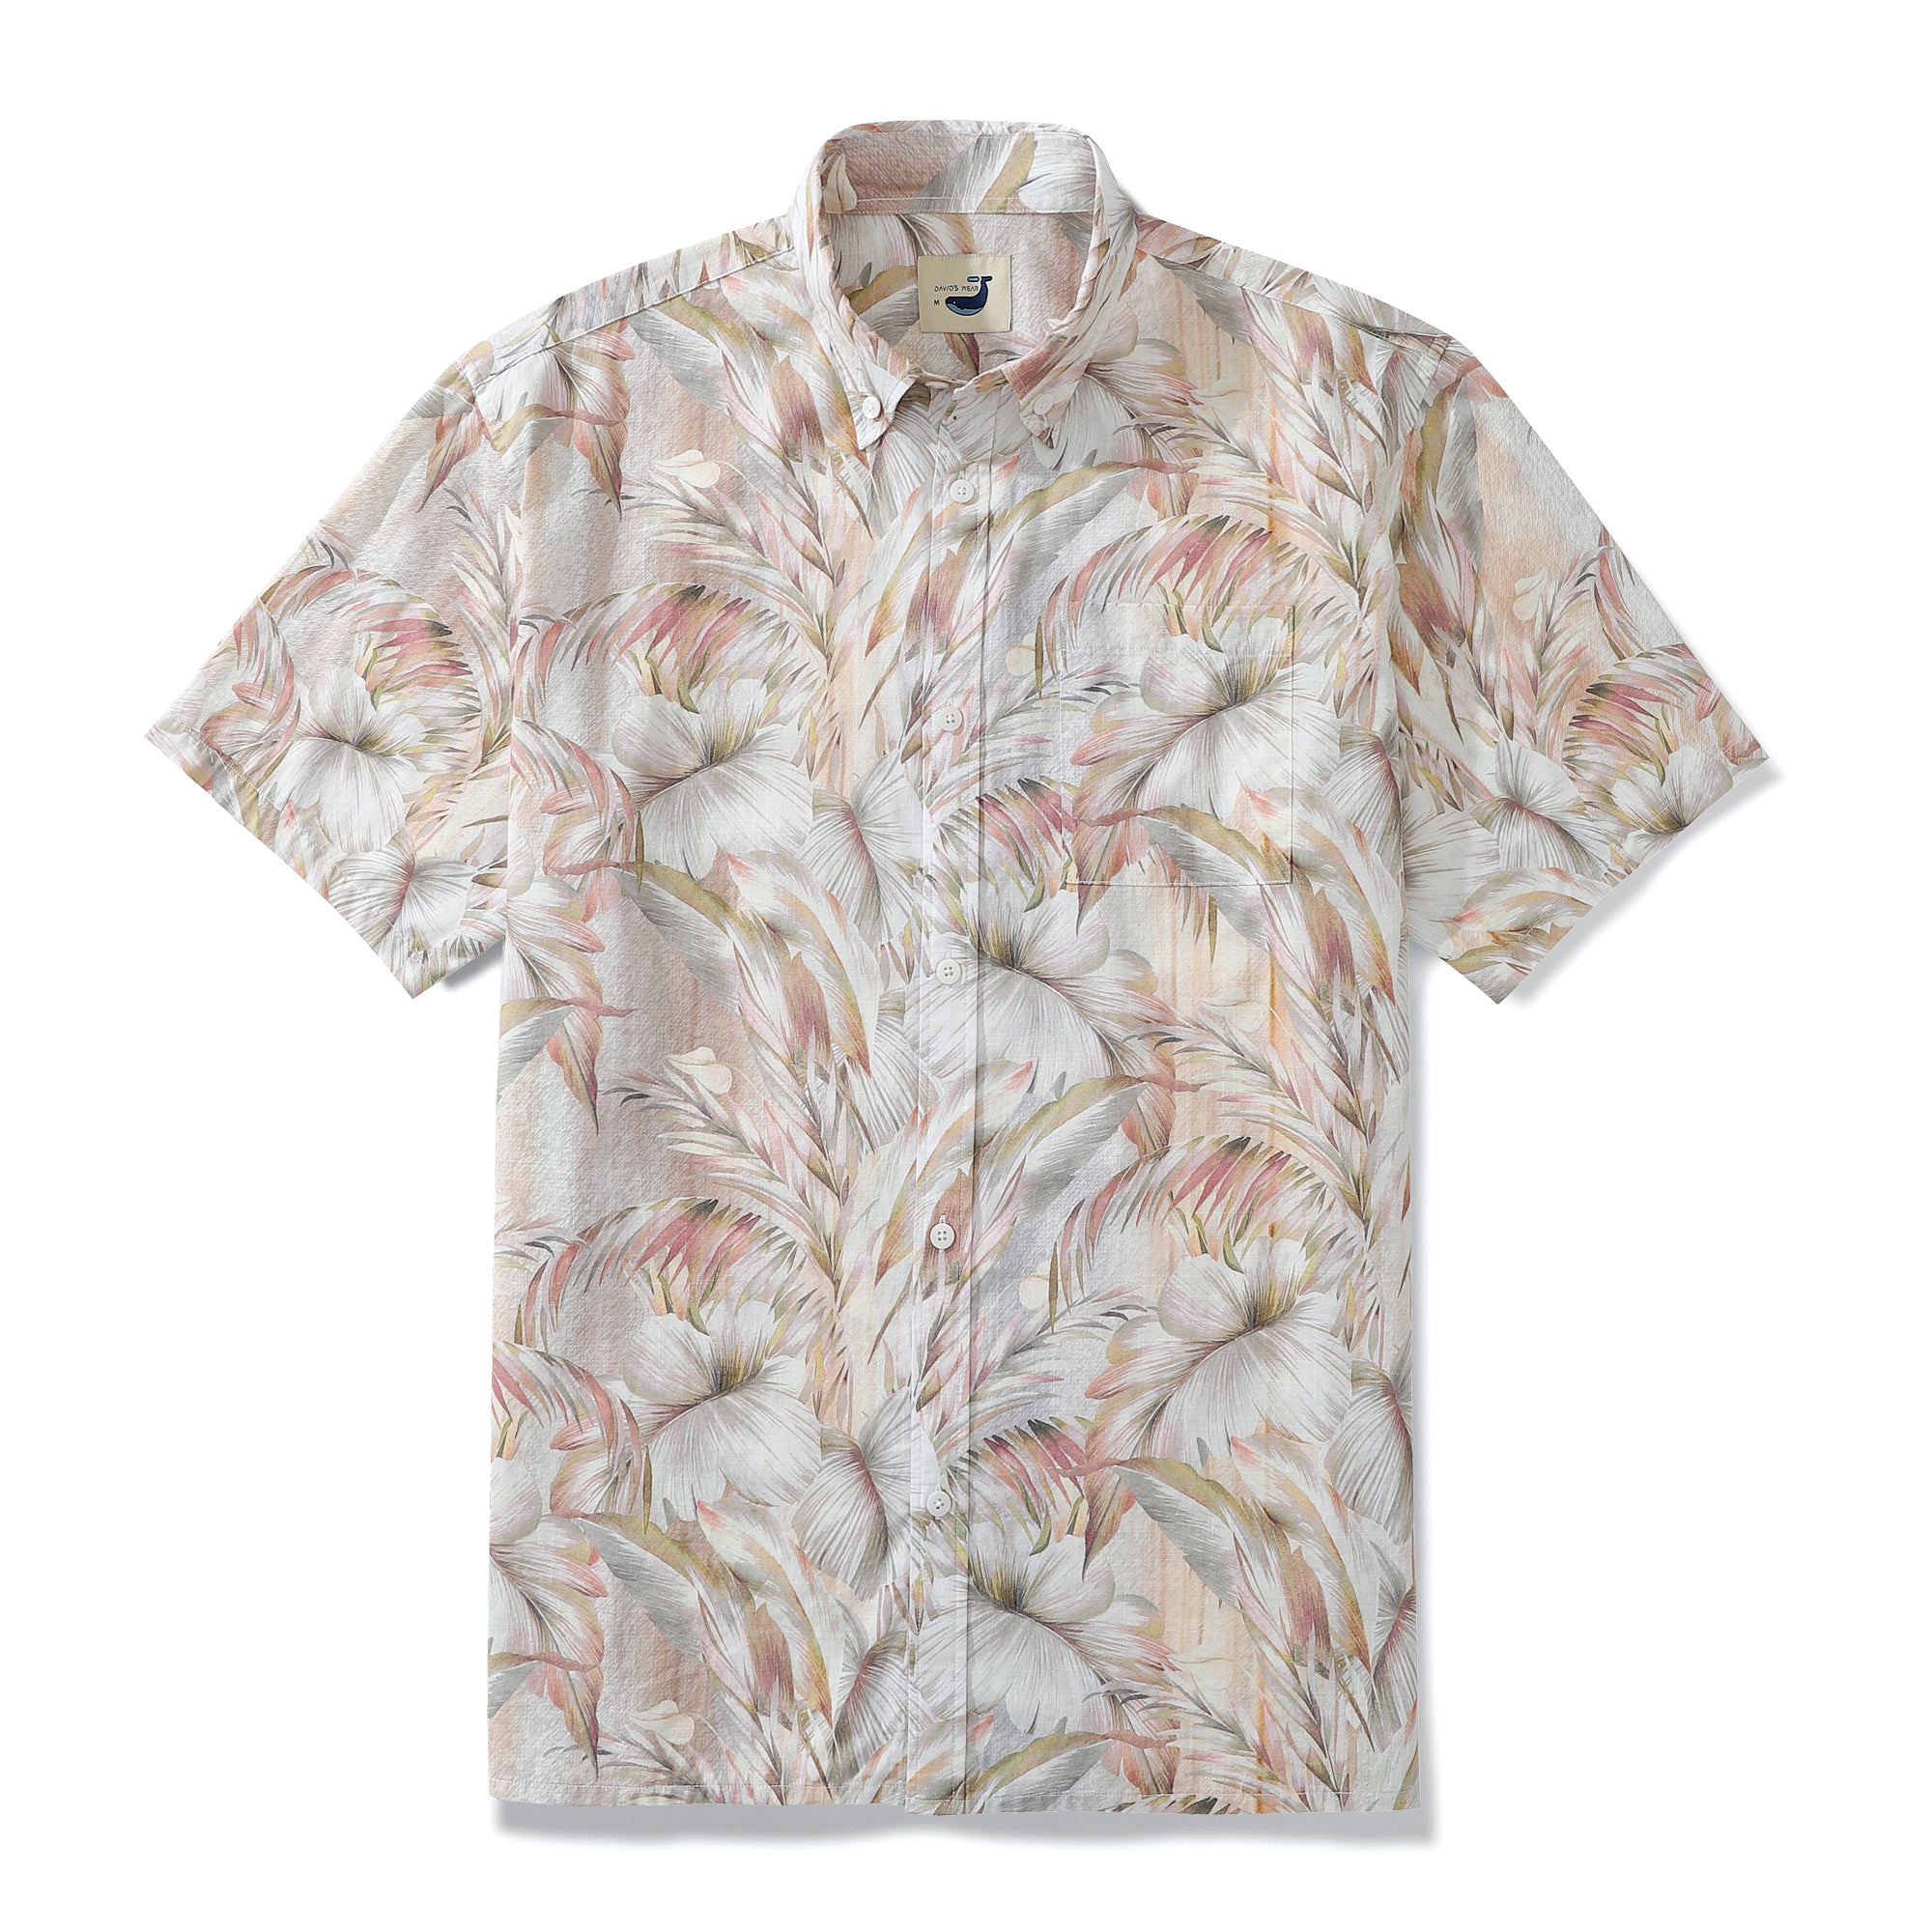 Men's Hawaiian Shirt Tropical Plam Leaves Short Sleeve Cotton Button Down